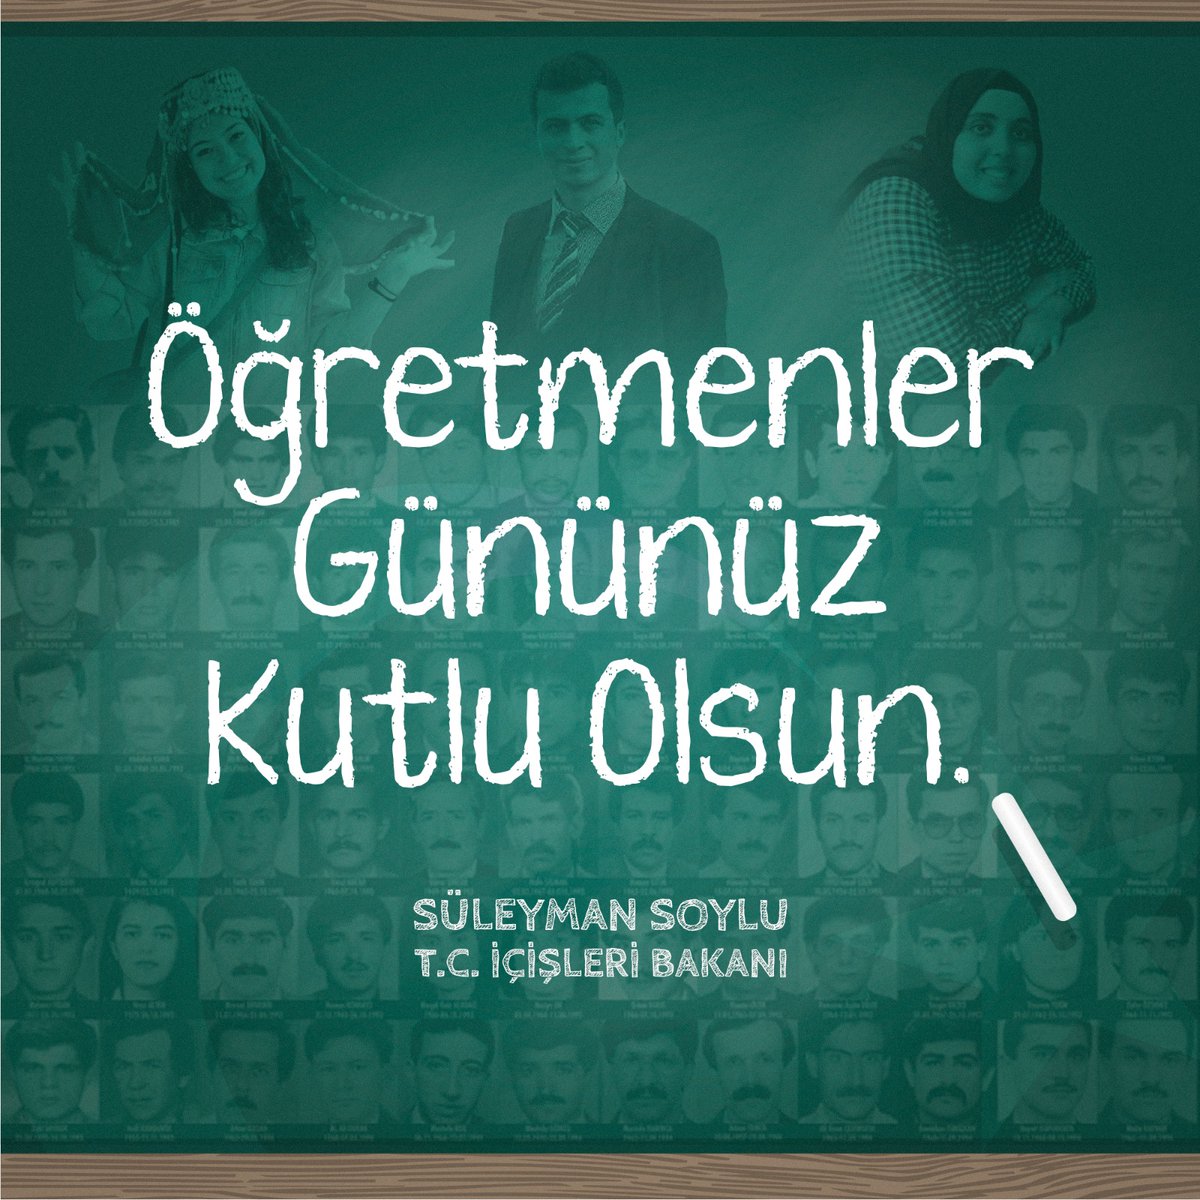 @suleymansoylu's photo on Mustafa Kemal Atatürk